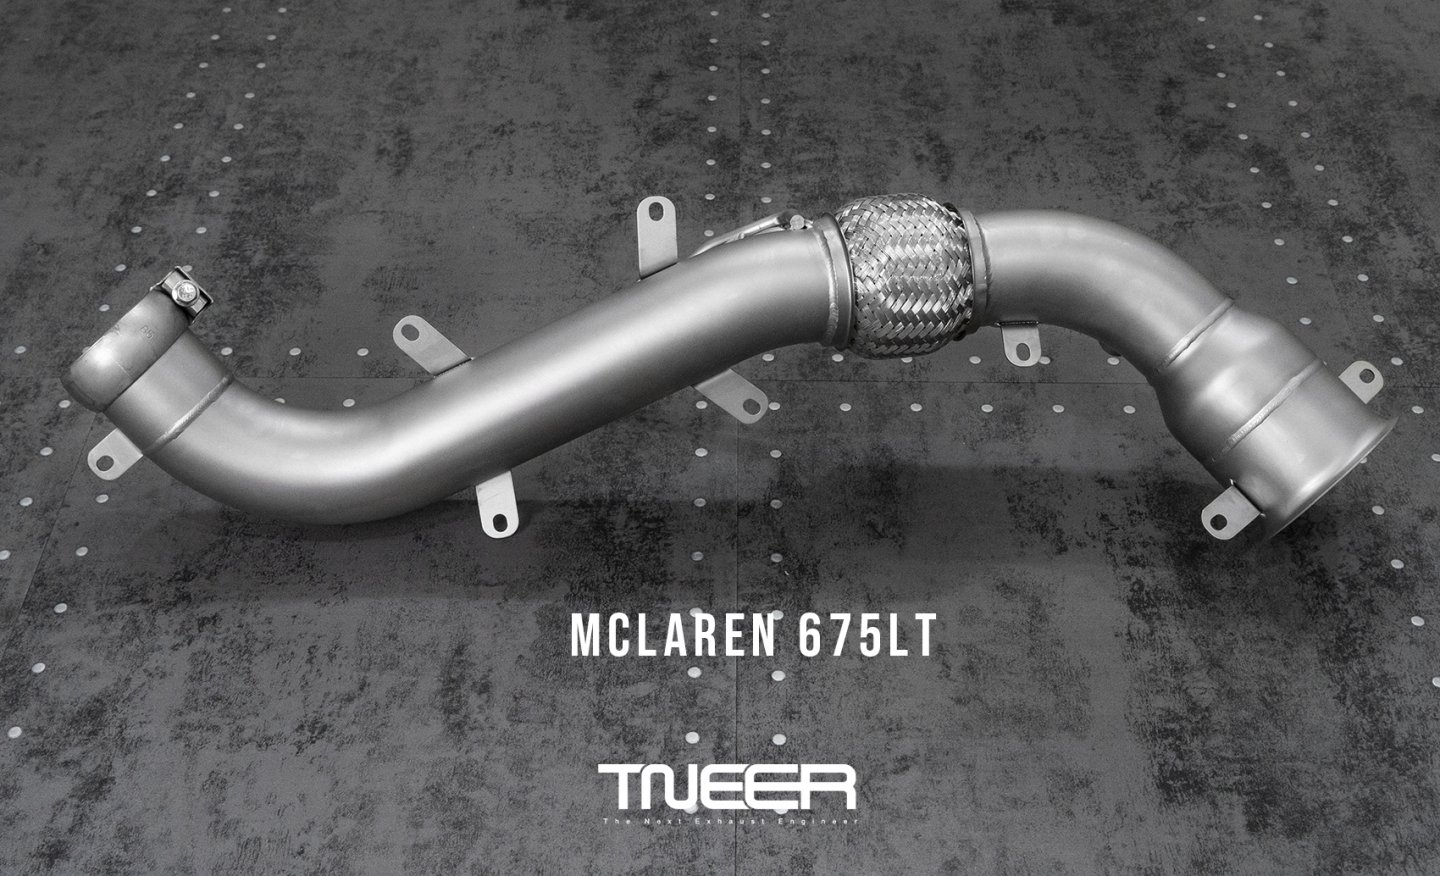 McLaren 675LT TNEER High-Performance Downpipes